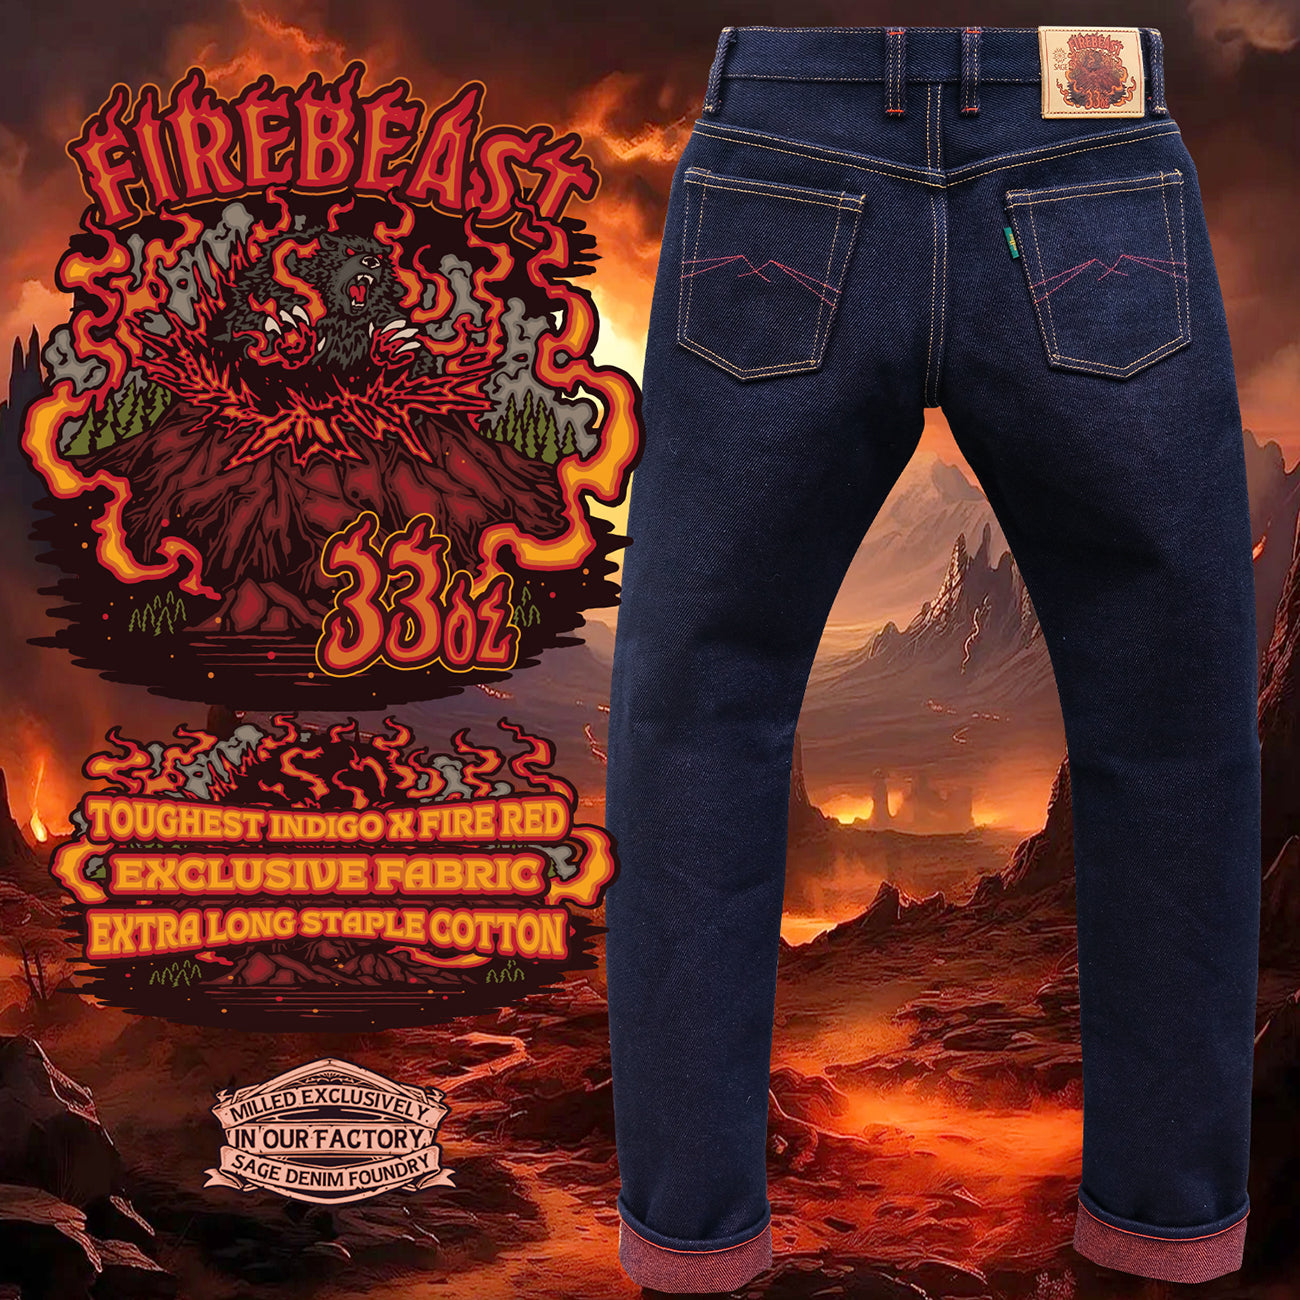 DEFECT SALE! Extreme Indigo x Fire Red: The Firebeast 33oz Unsanforized Deep Indigo x Fire Red